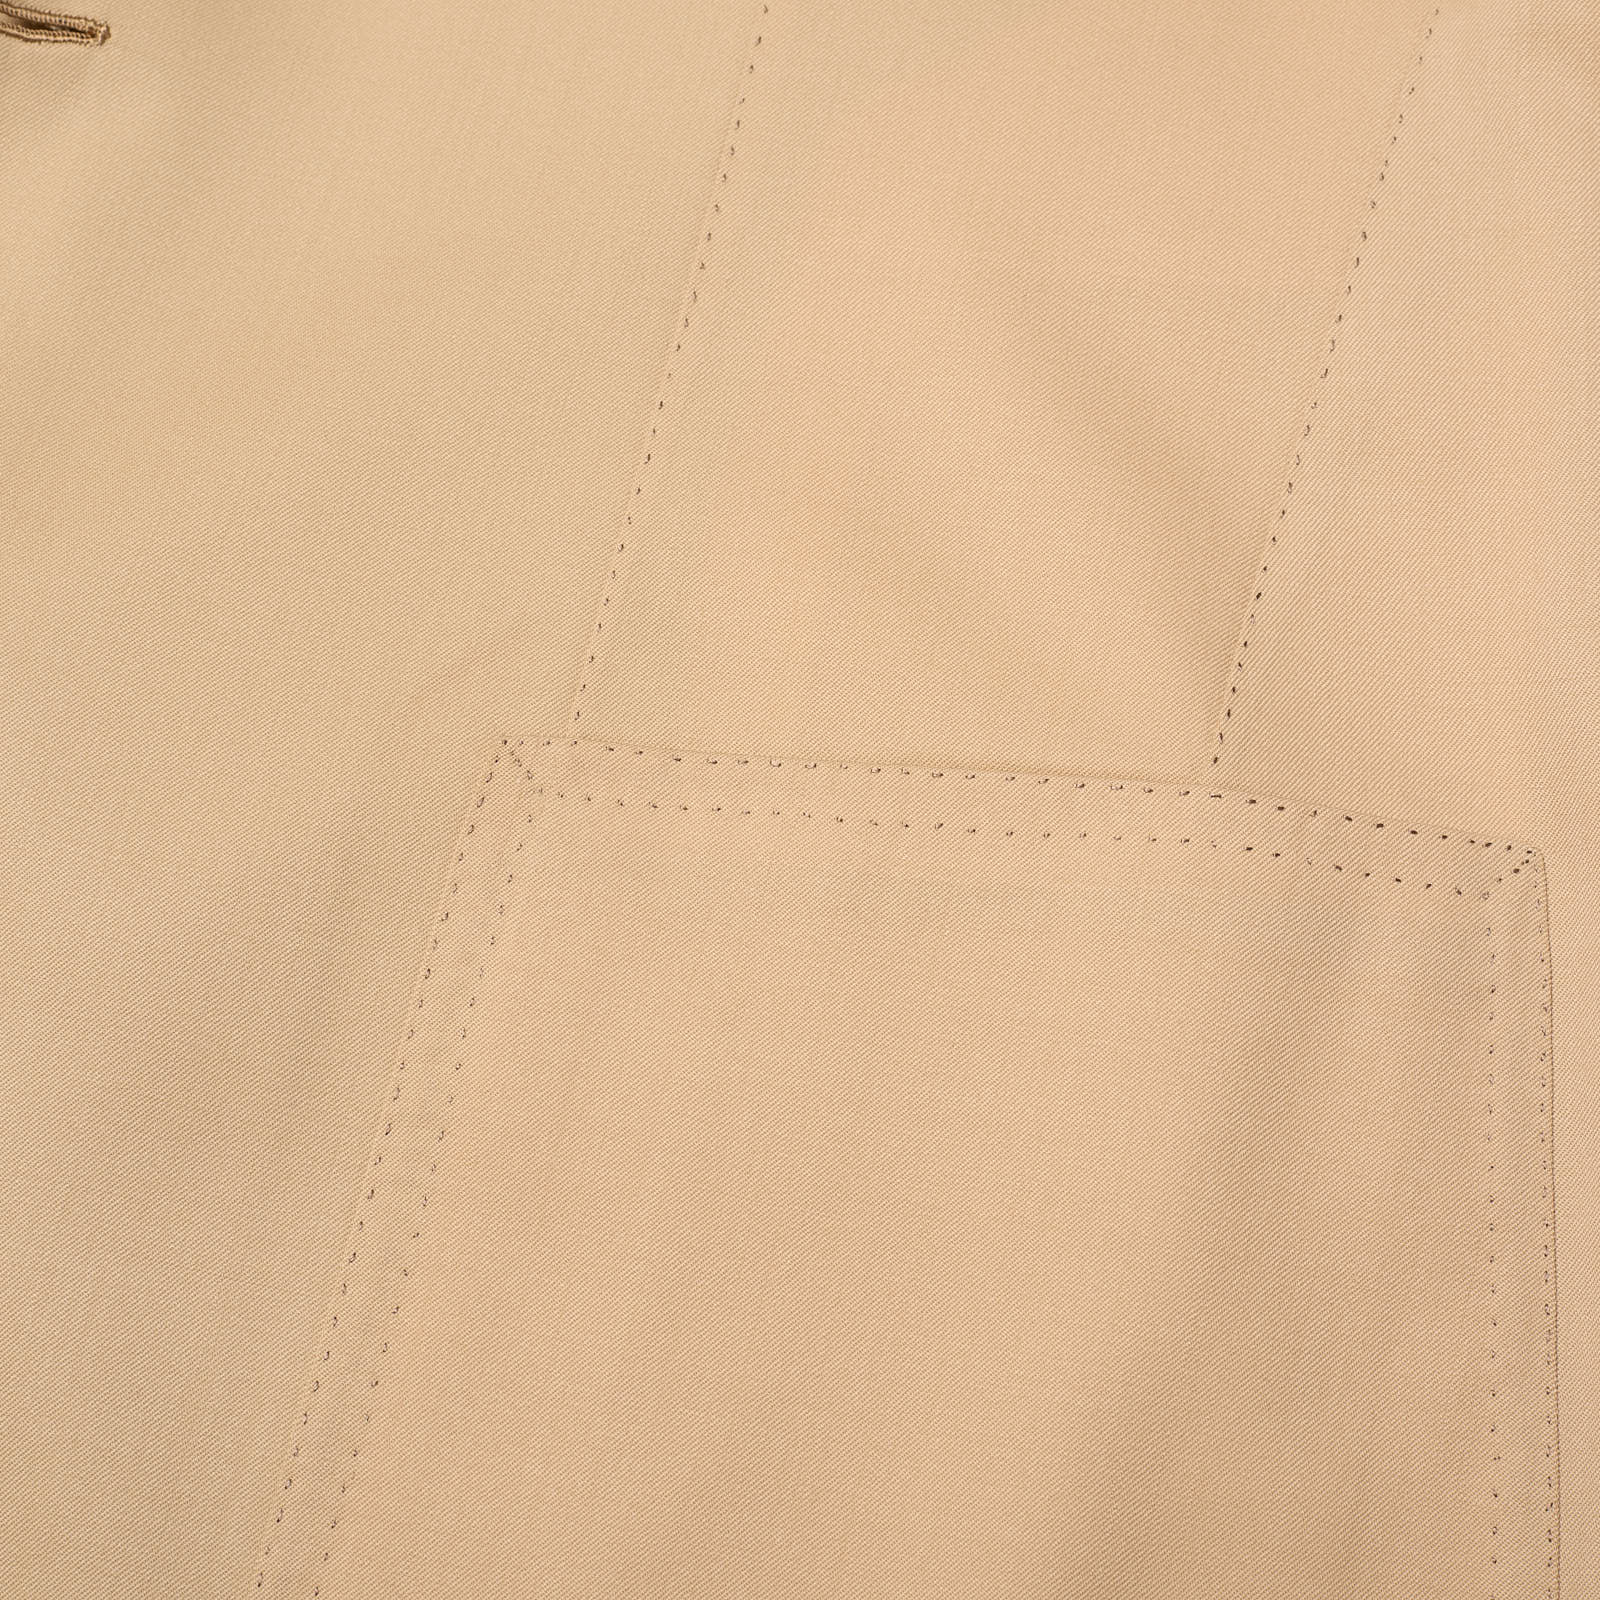 RUBINACCI LH Handmade Bespoke Beige Cotton Jacket EU 50 US 40